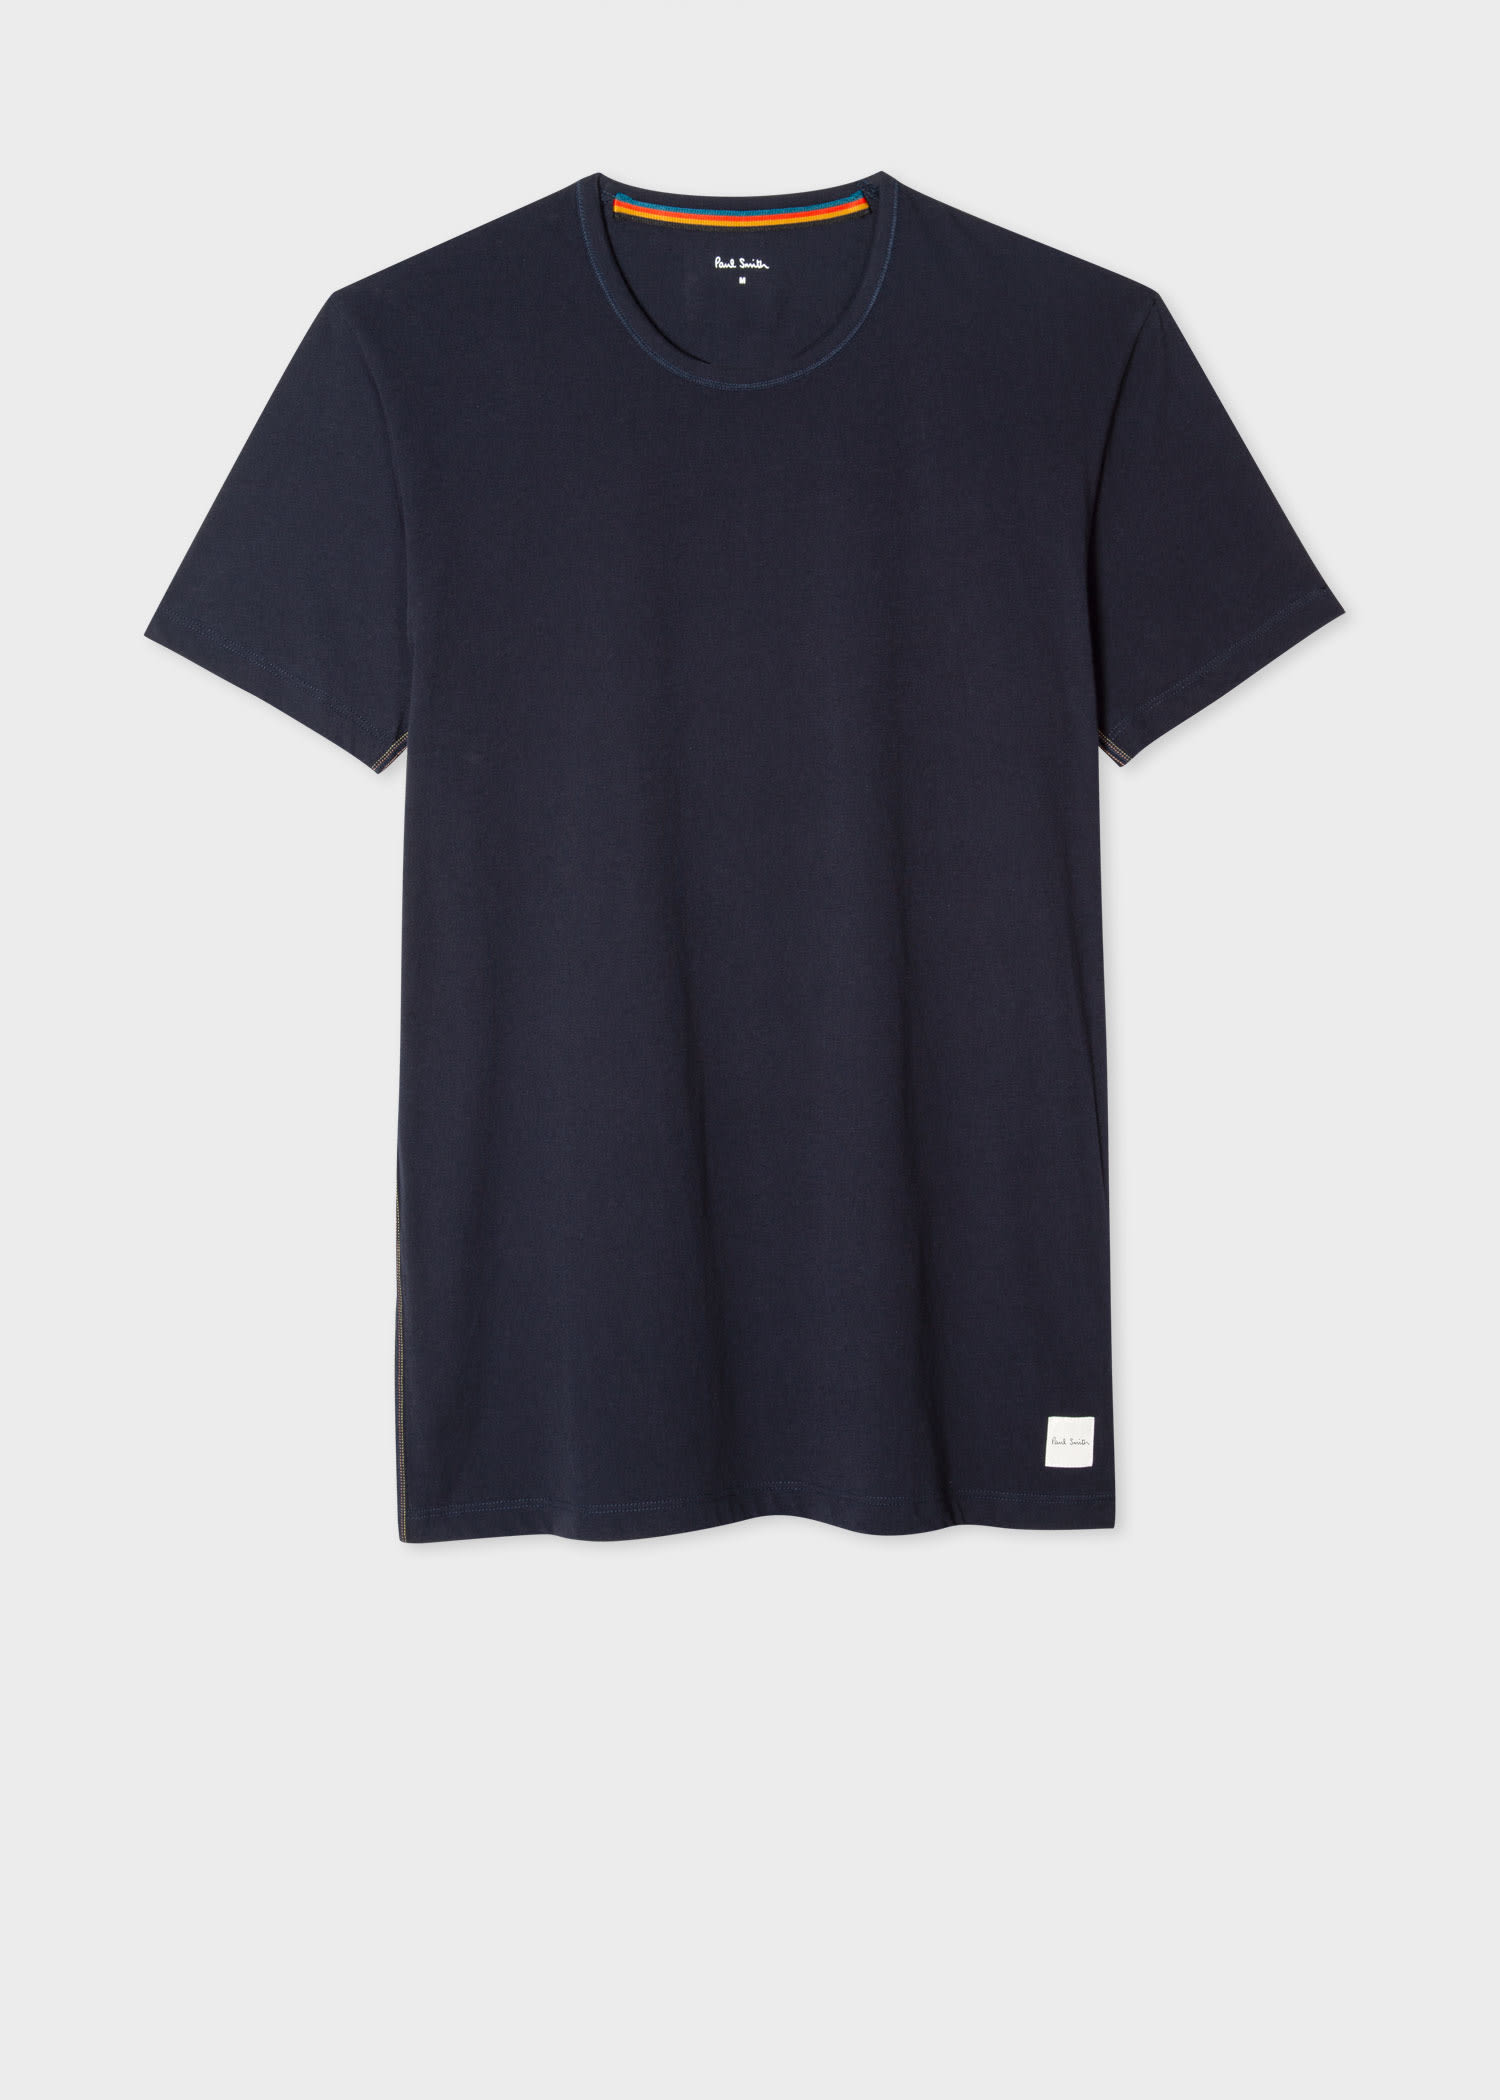 Men's Designer T-Shirts | Printed, Plain, & Long Sleeve - Paul Smith